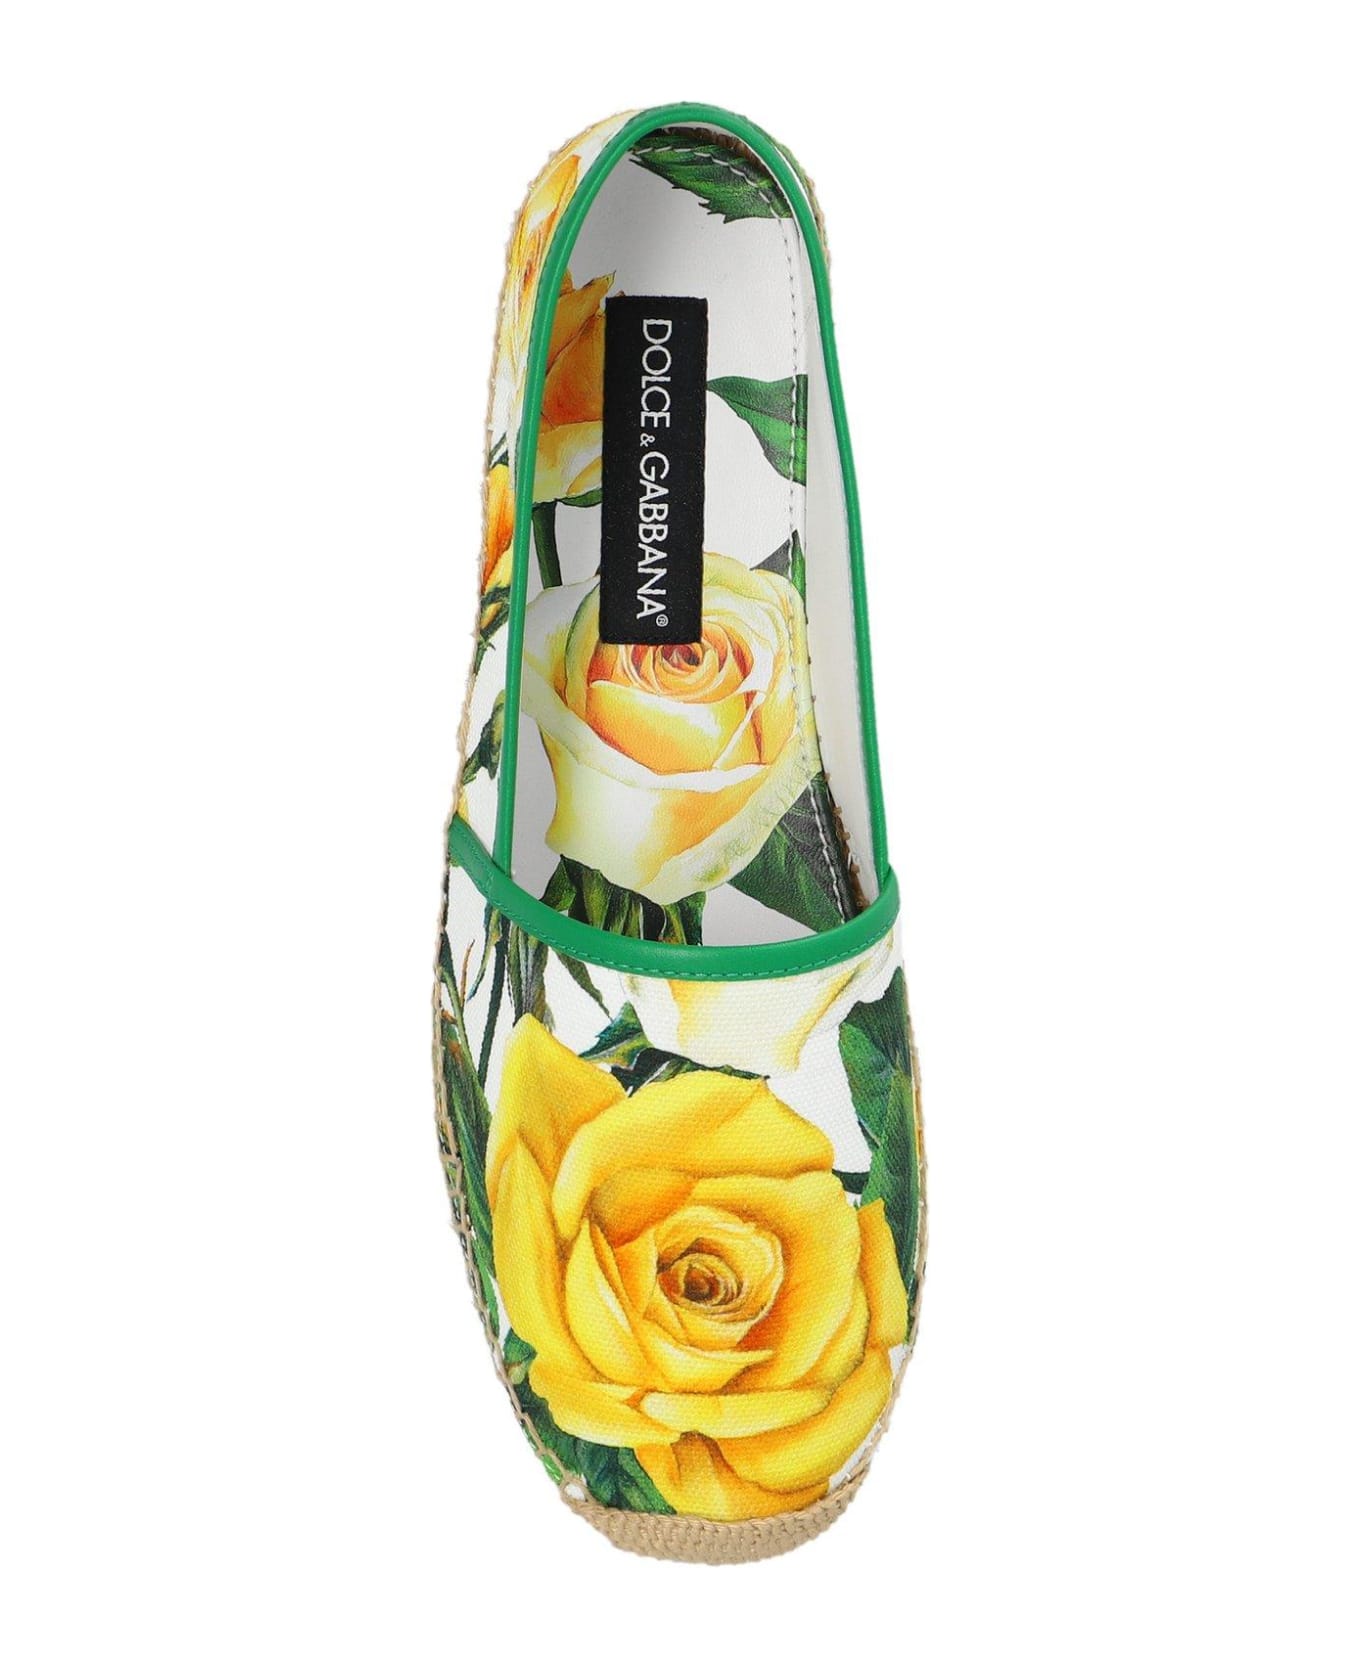 Dolce & Gabbana Floral Printed Espadrilles - Gialla ウェッジシューズ